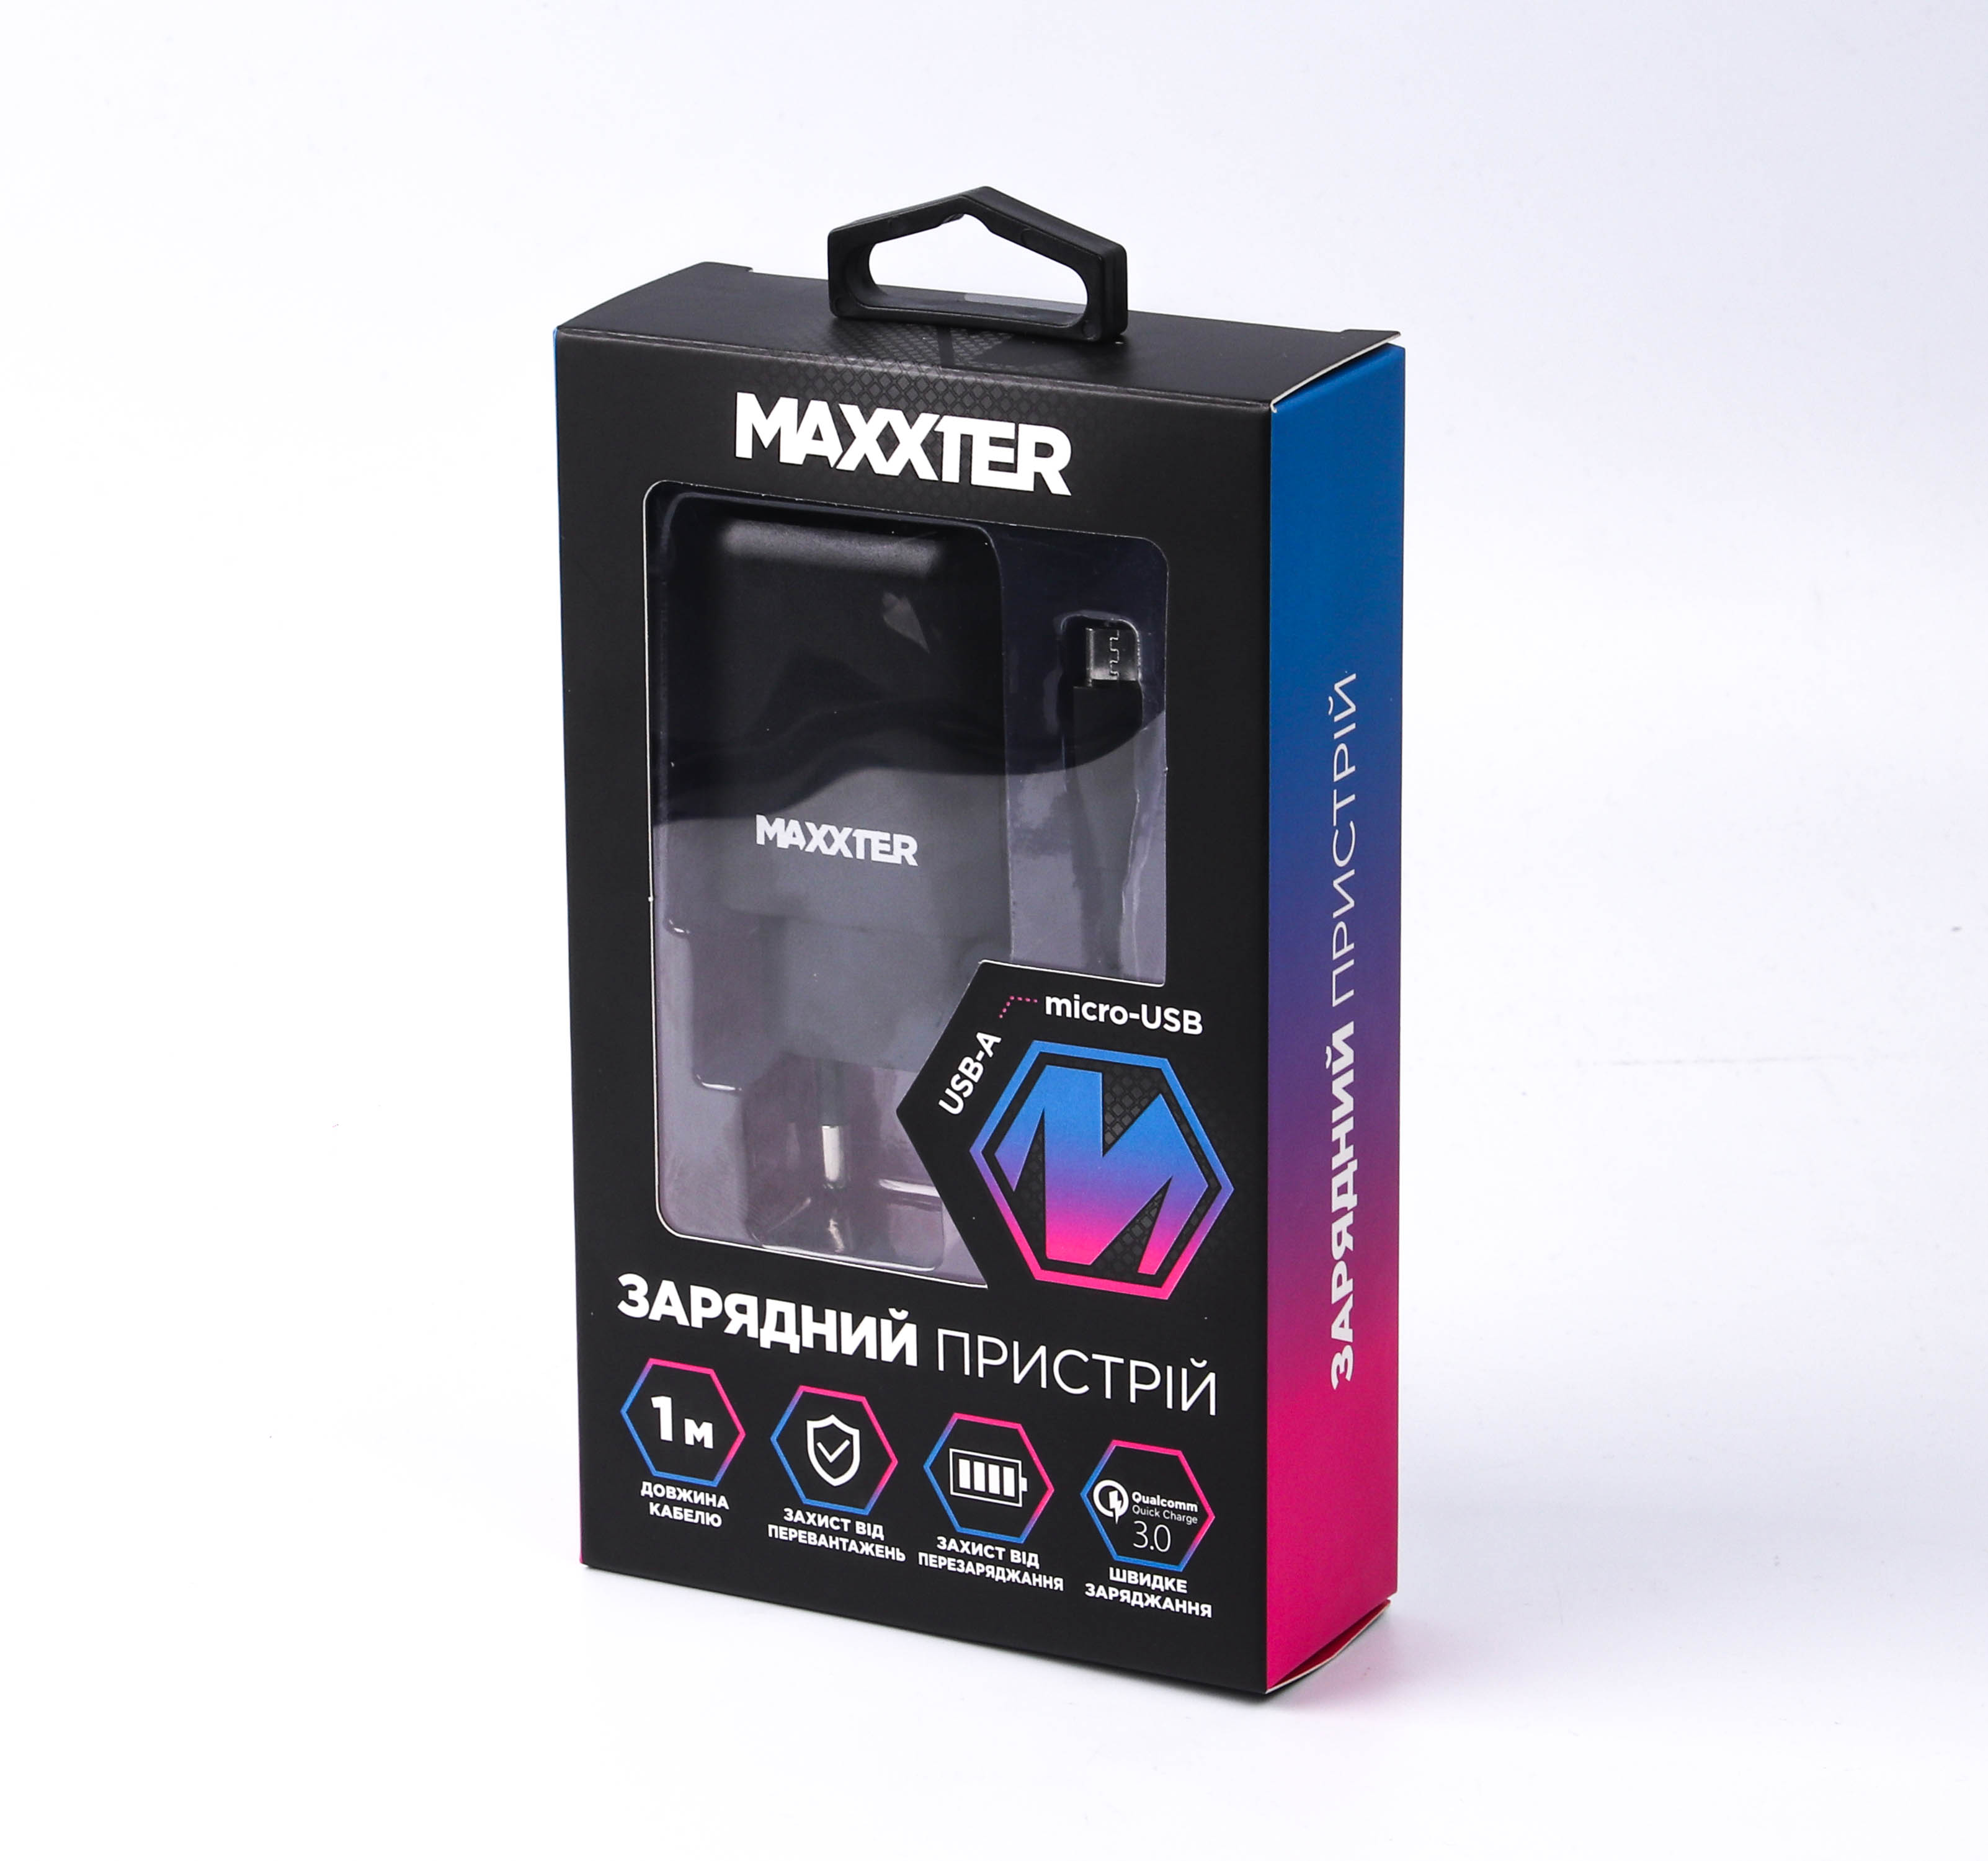 продаём Maxxter 1 USB + cable Micro-USB (WC-QC-AtM-01) в Украине - фото 4